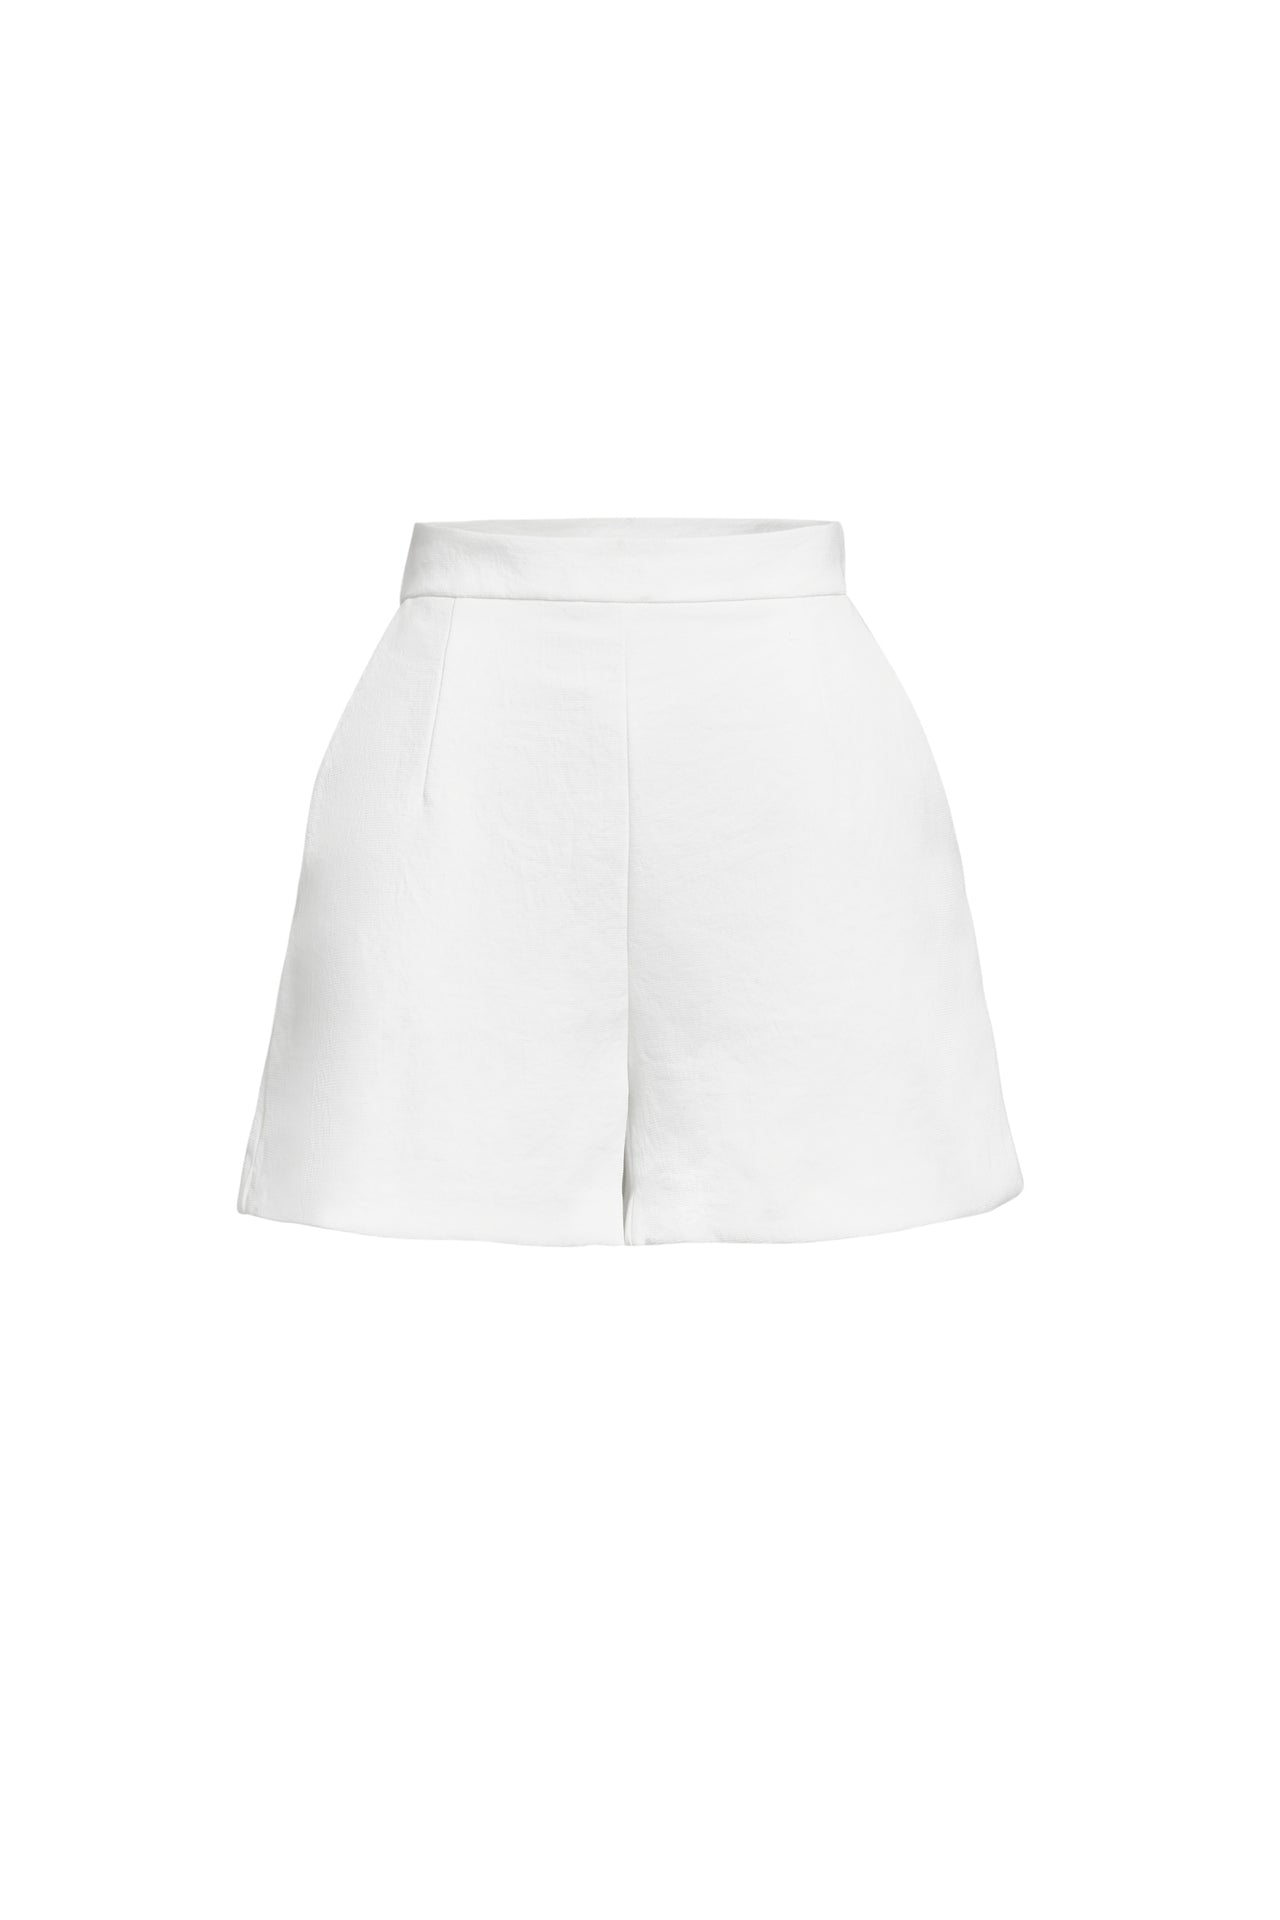 Buy Wafer Shorts Natural White Online | KOOKAÏ Australia